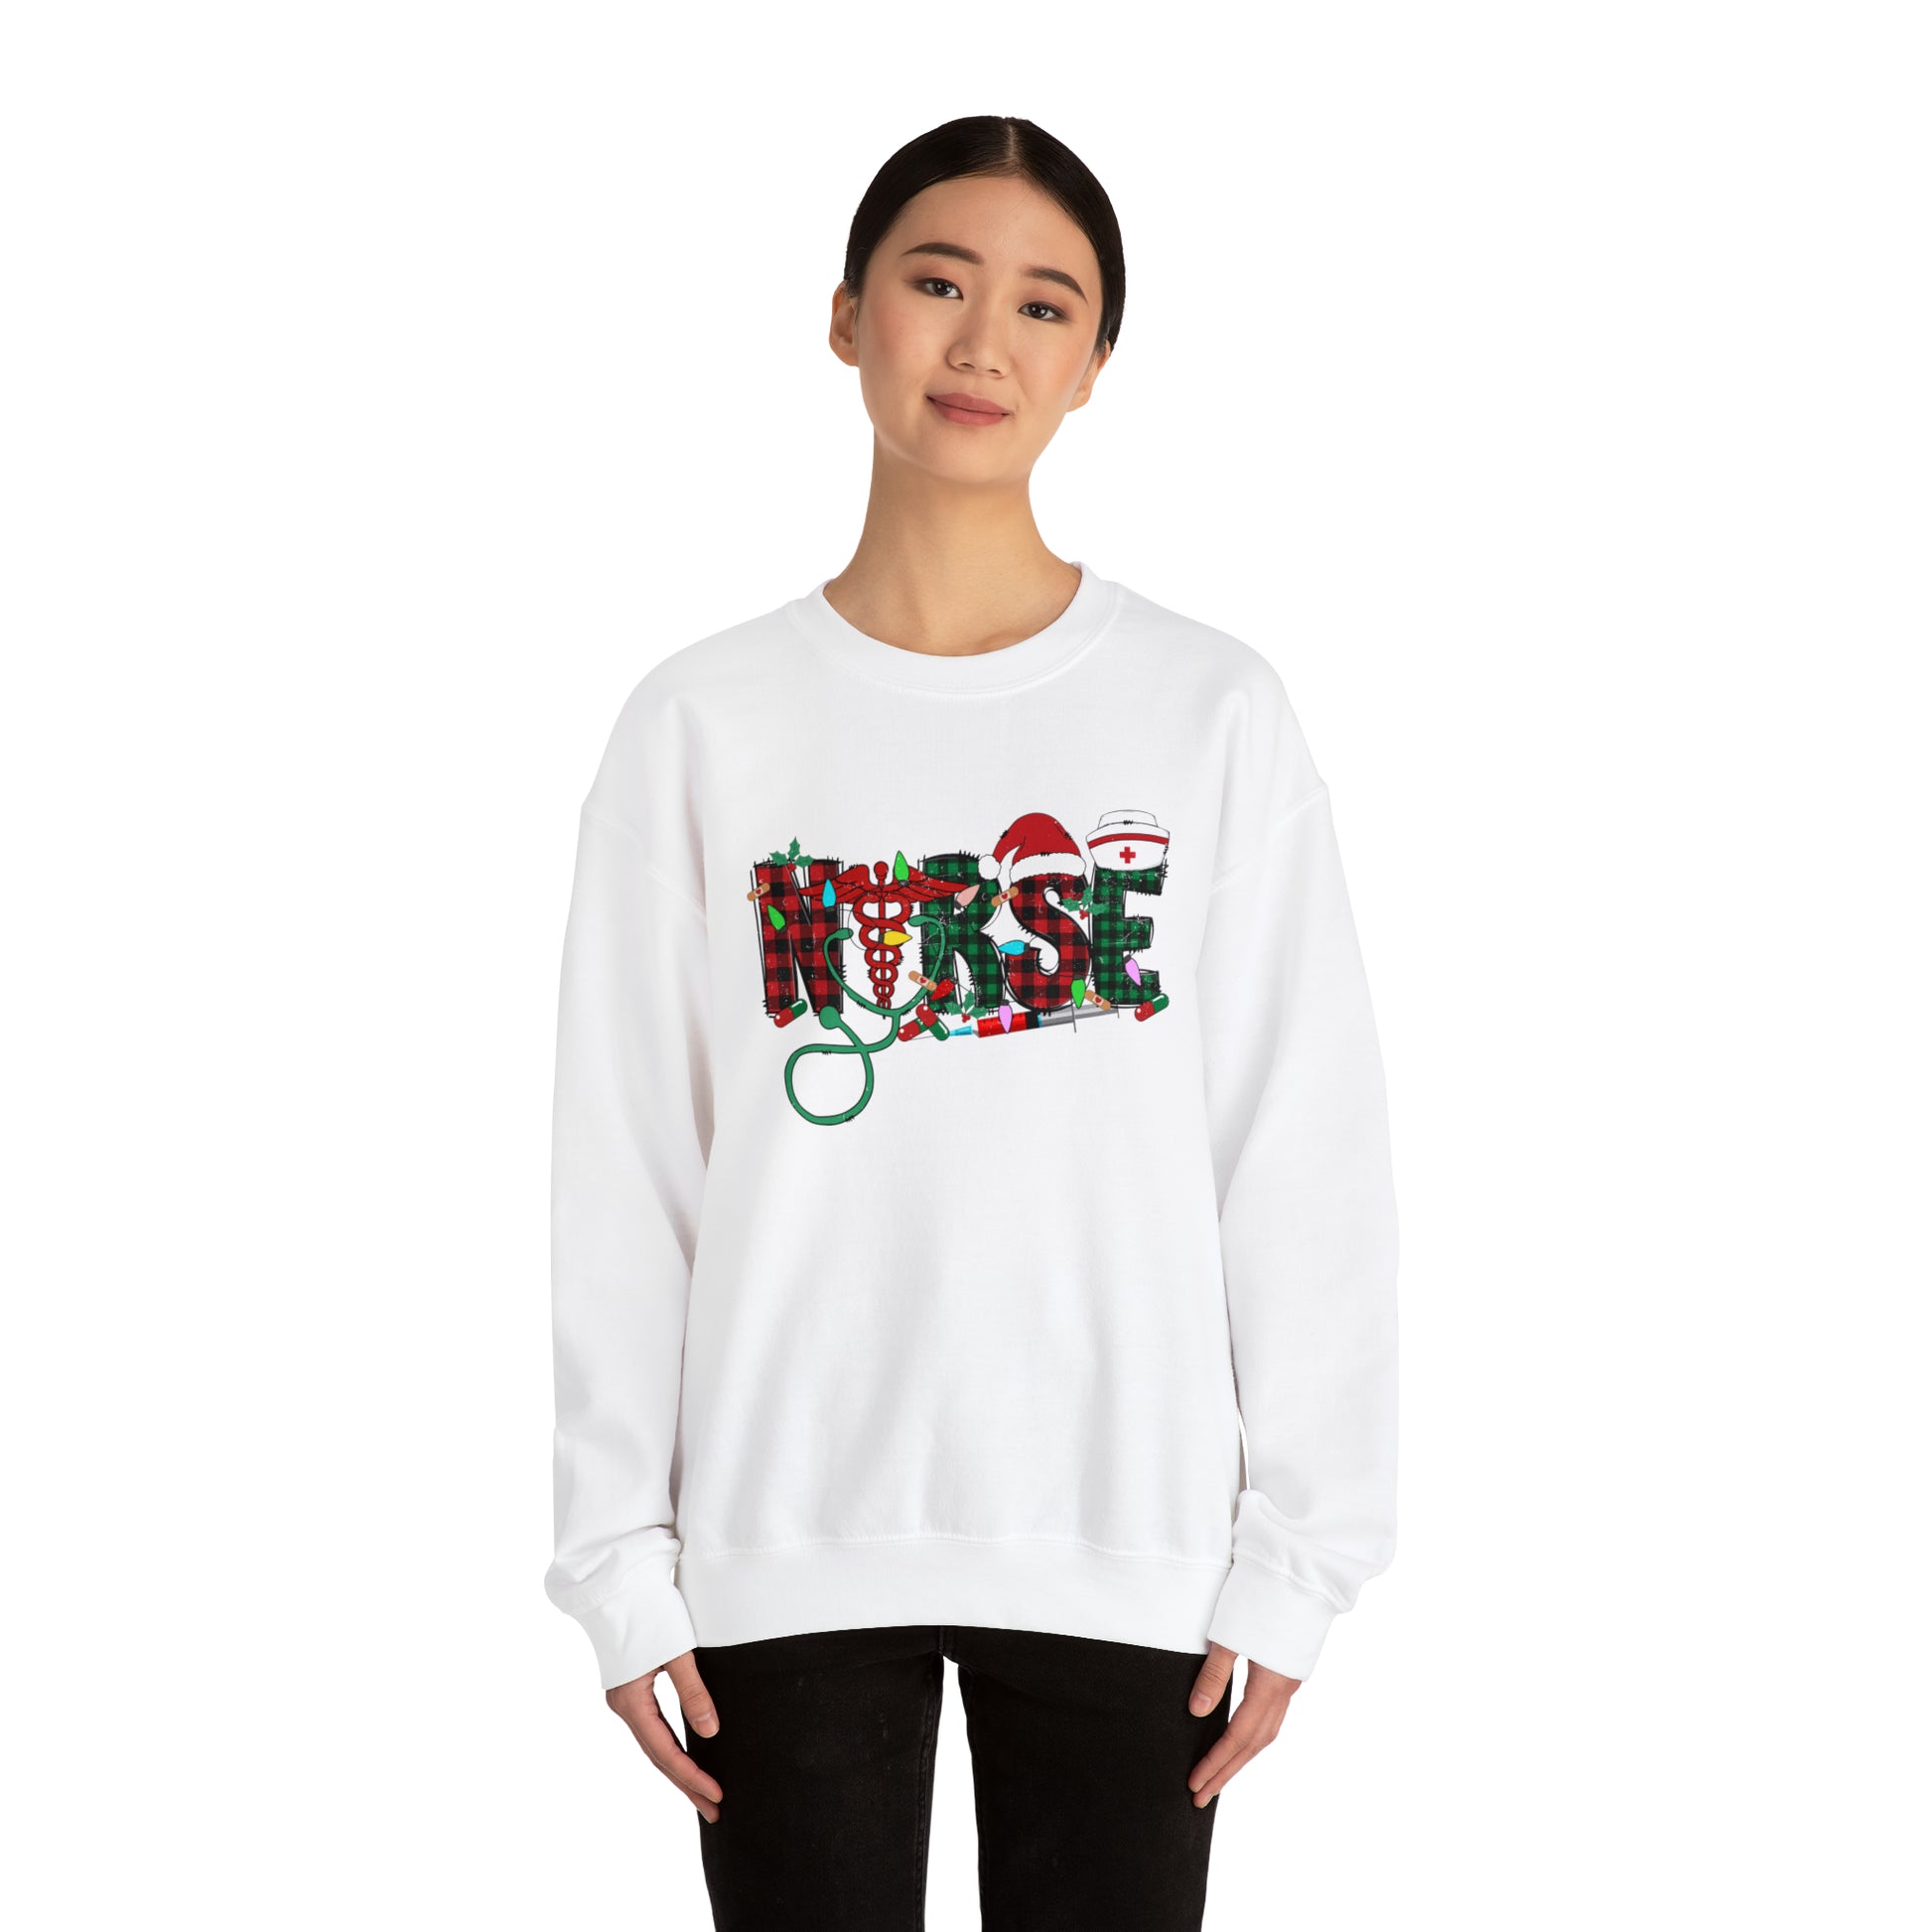 Nurse Christmas Sweatshirt, Nurse Holiday Shirt, RN Cozy Winter Holiday Sweater, Sweatshirt with Retro Nurse Design, Nurse Christmas Gift - Teez Closet